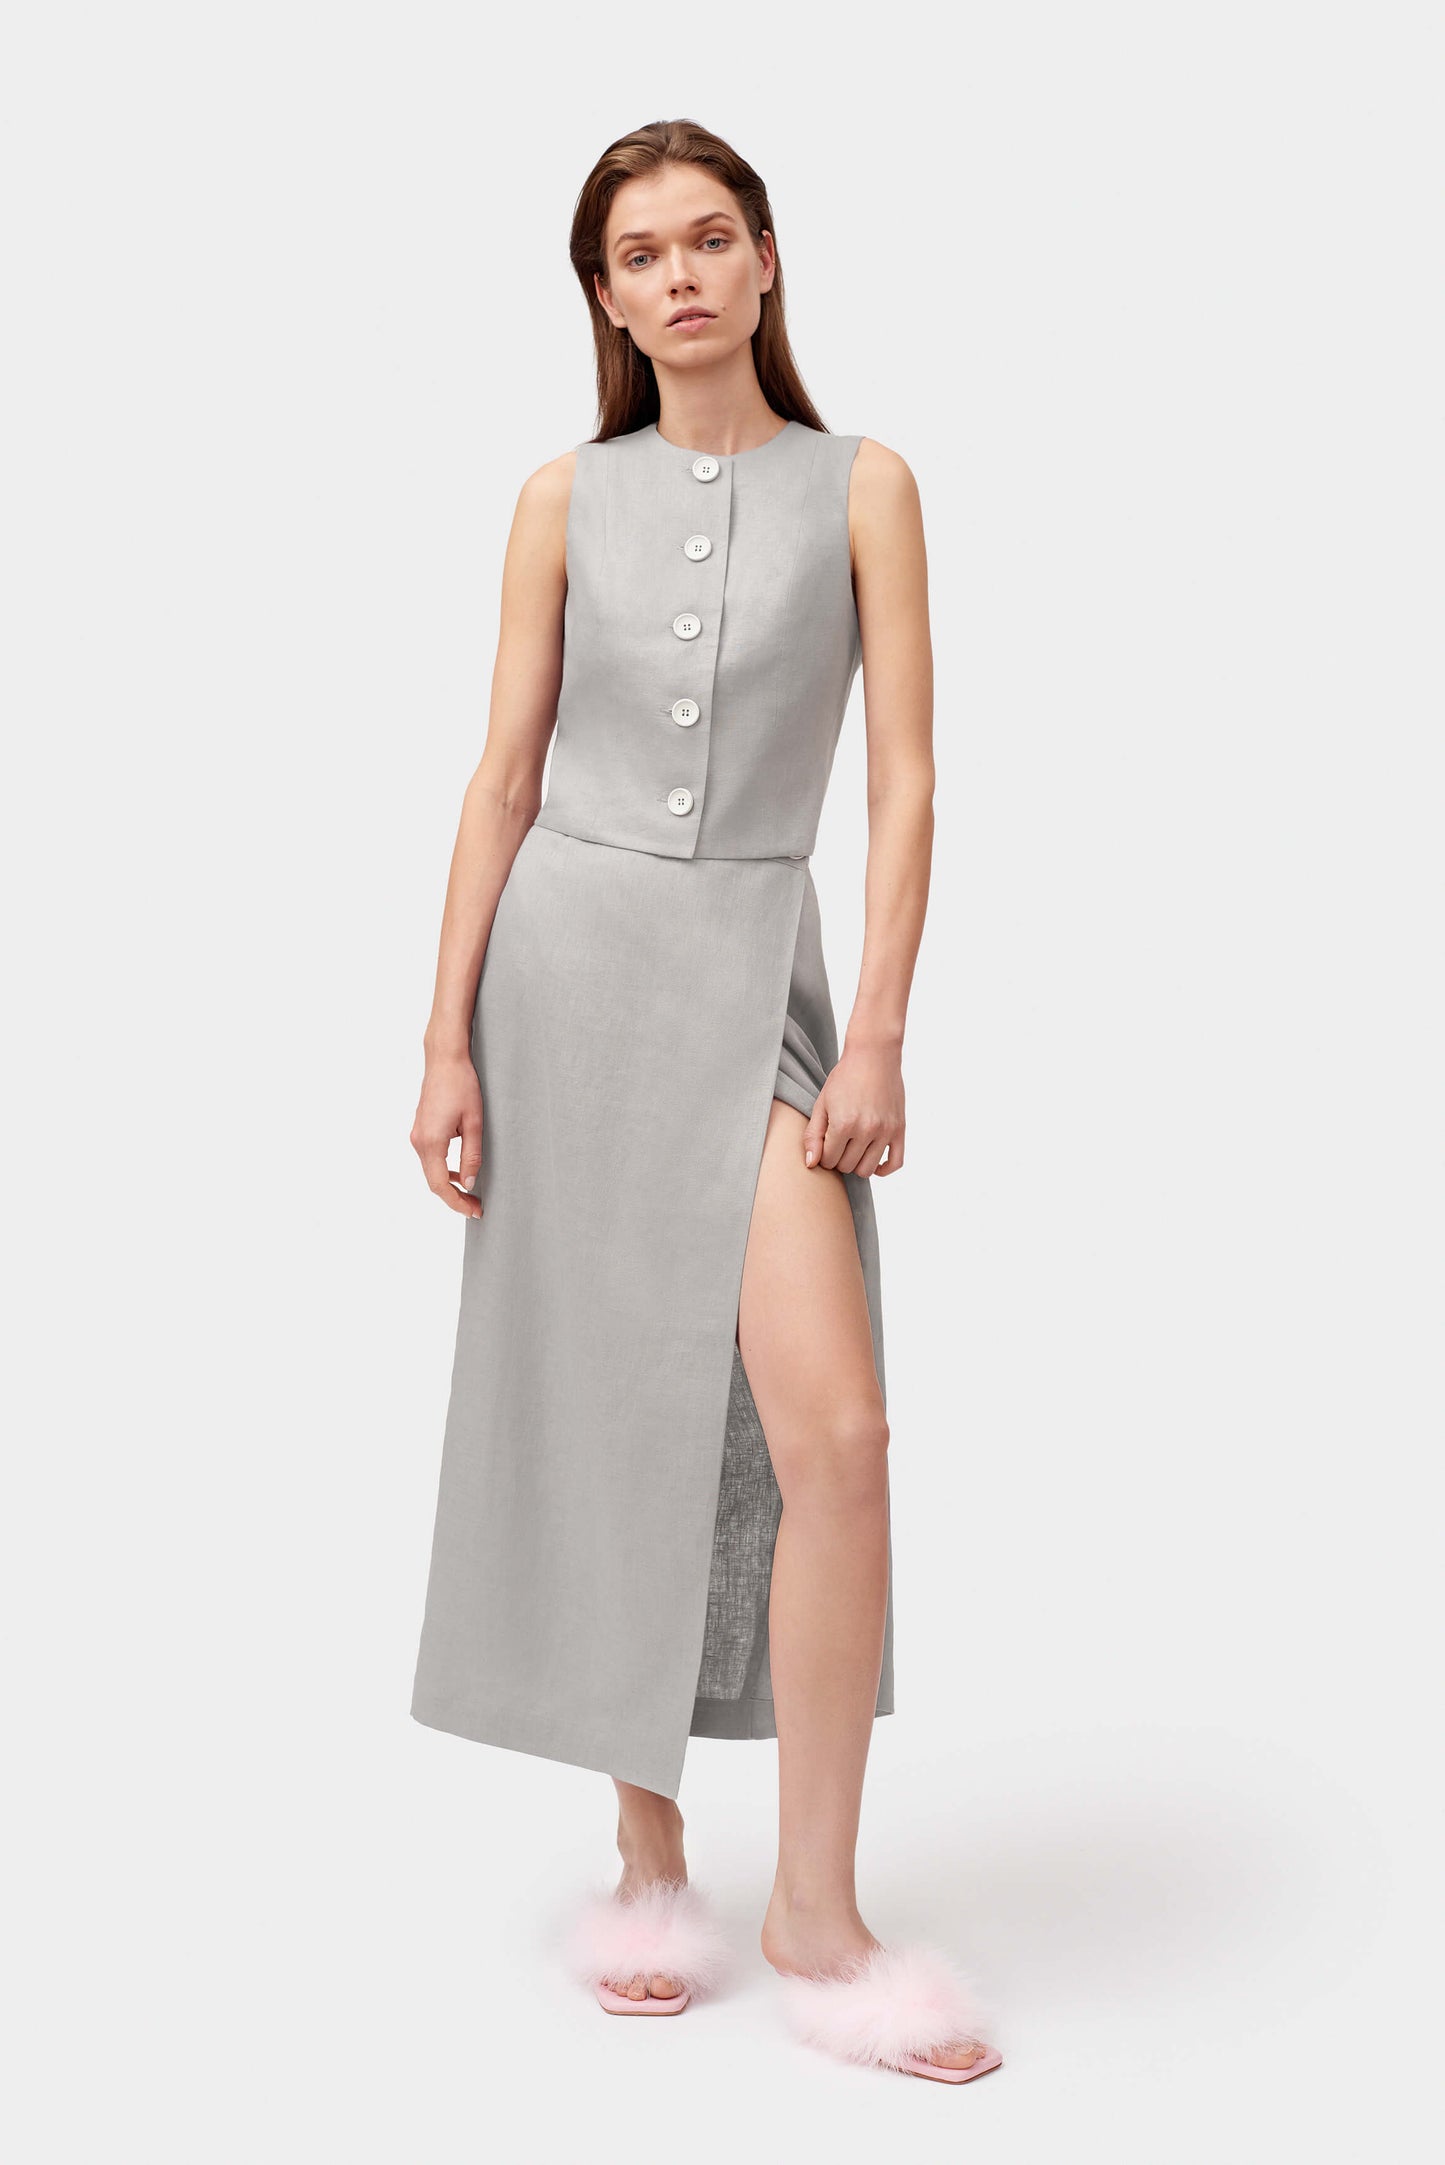 Lili Marleen Skirt in Grey